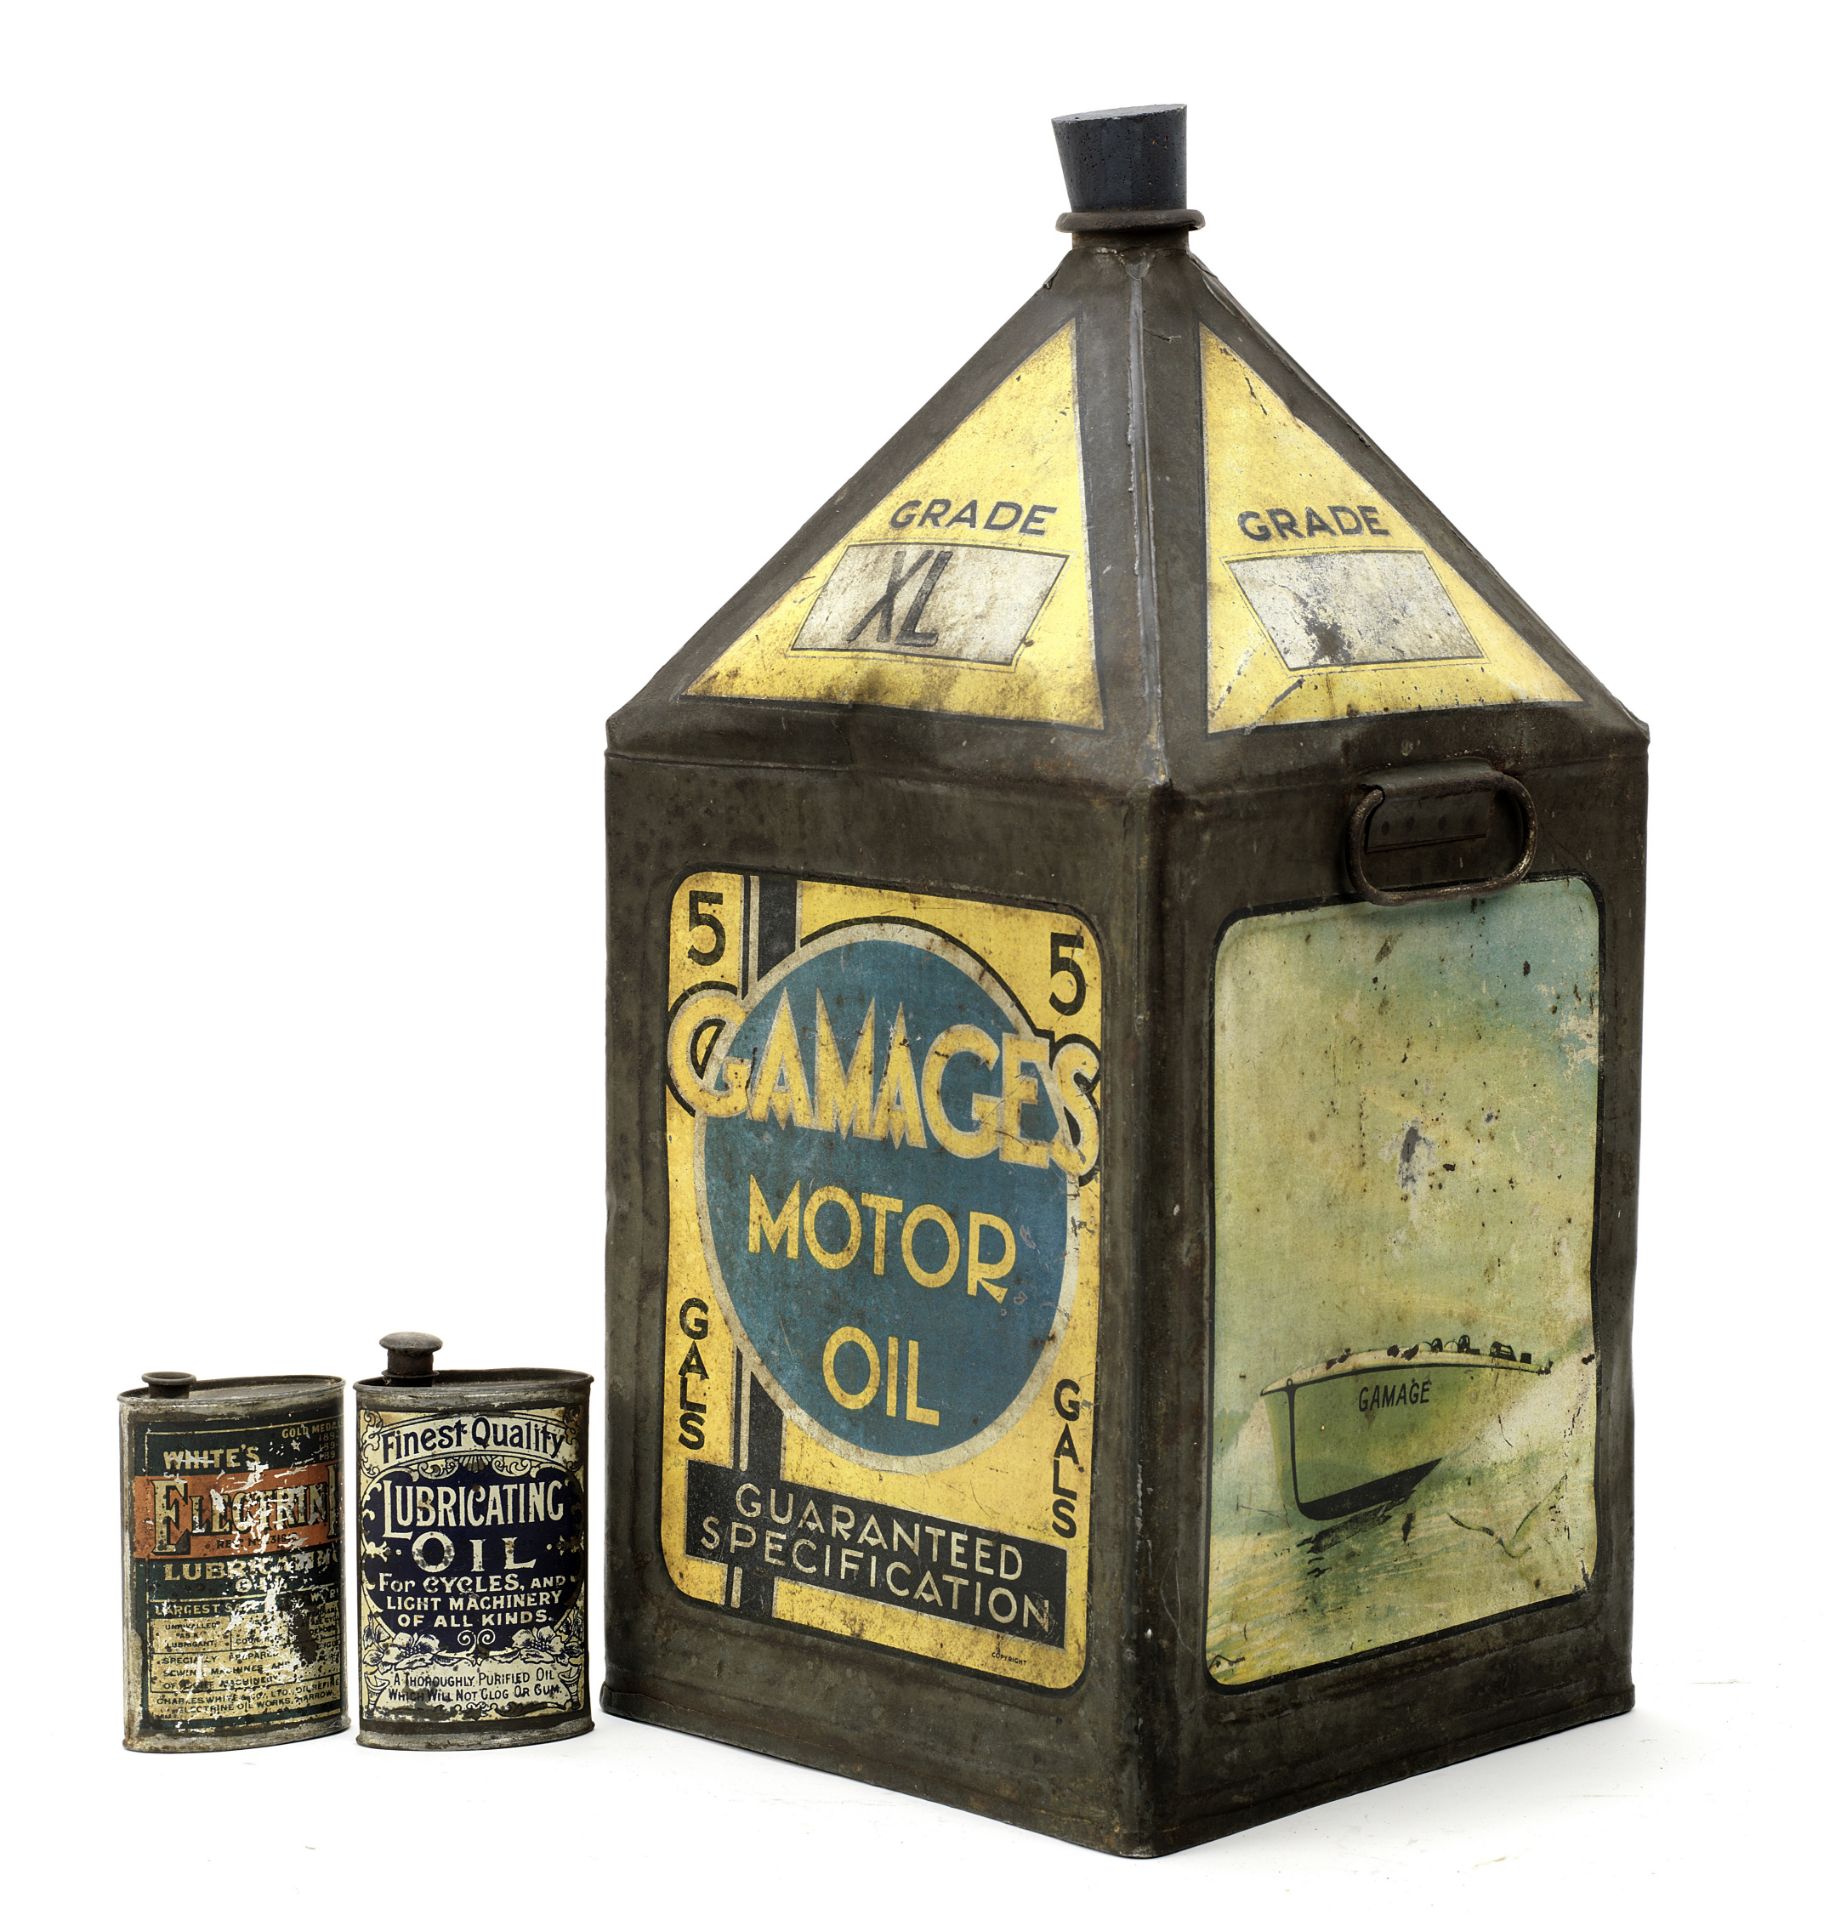 A Gamages Motor Oil 5 gallon can, circa 1930, ((3))